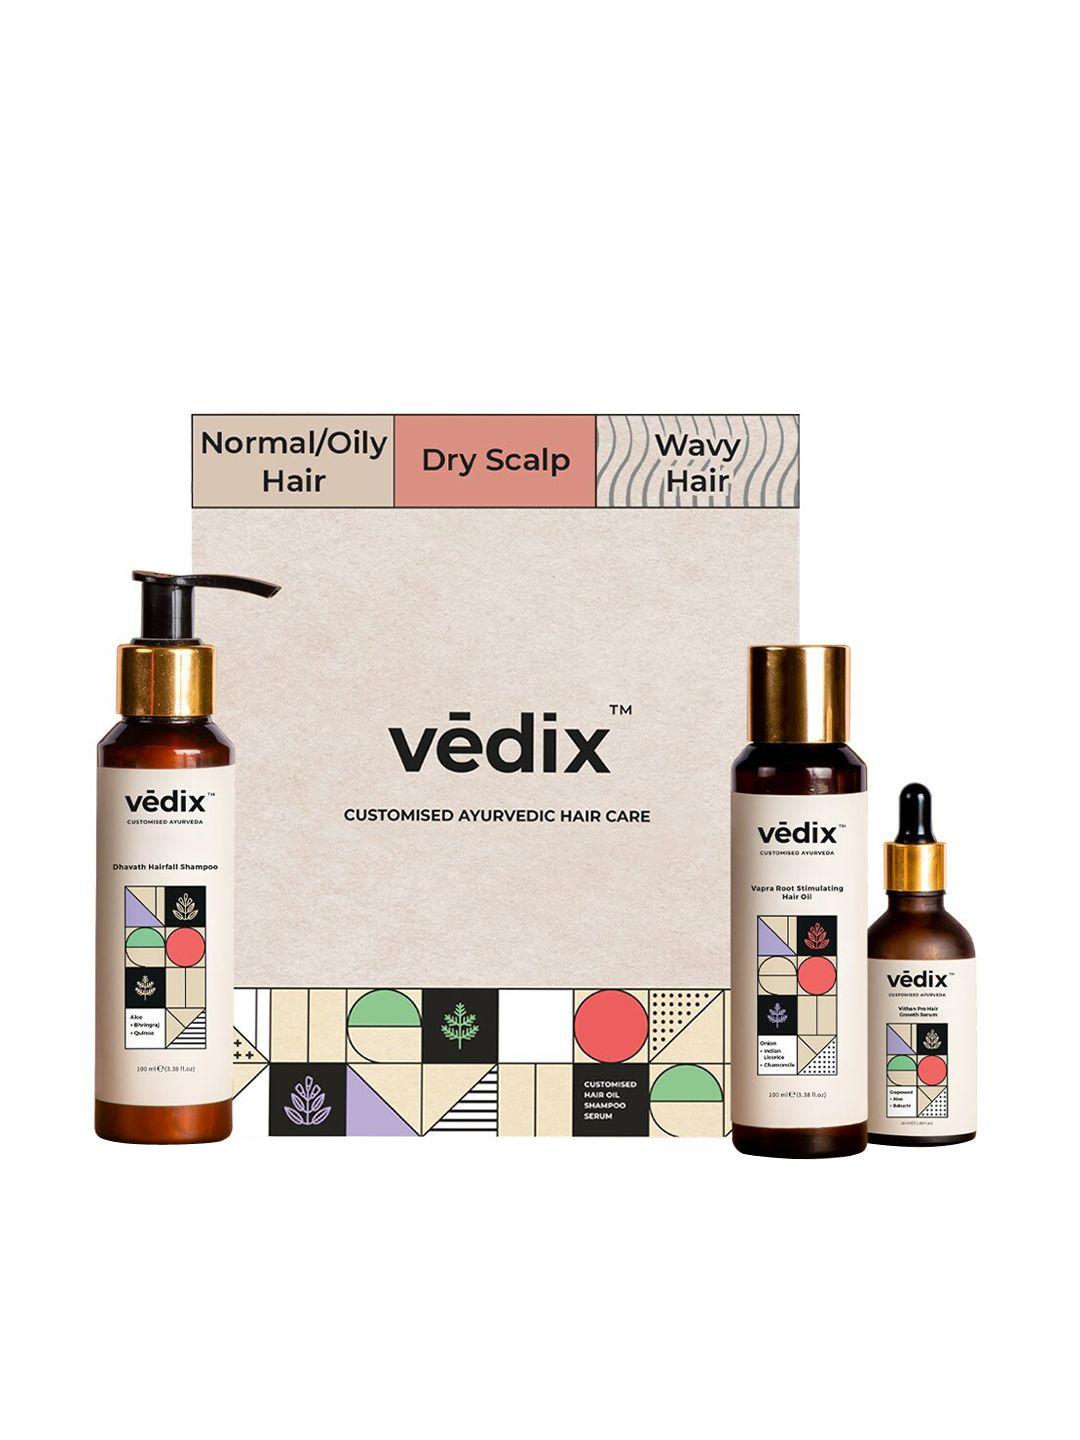 vedix womens customized hair fall control regimen with dandruff-dry scalp+wavy hair